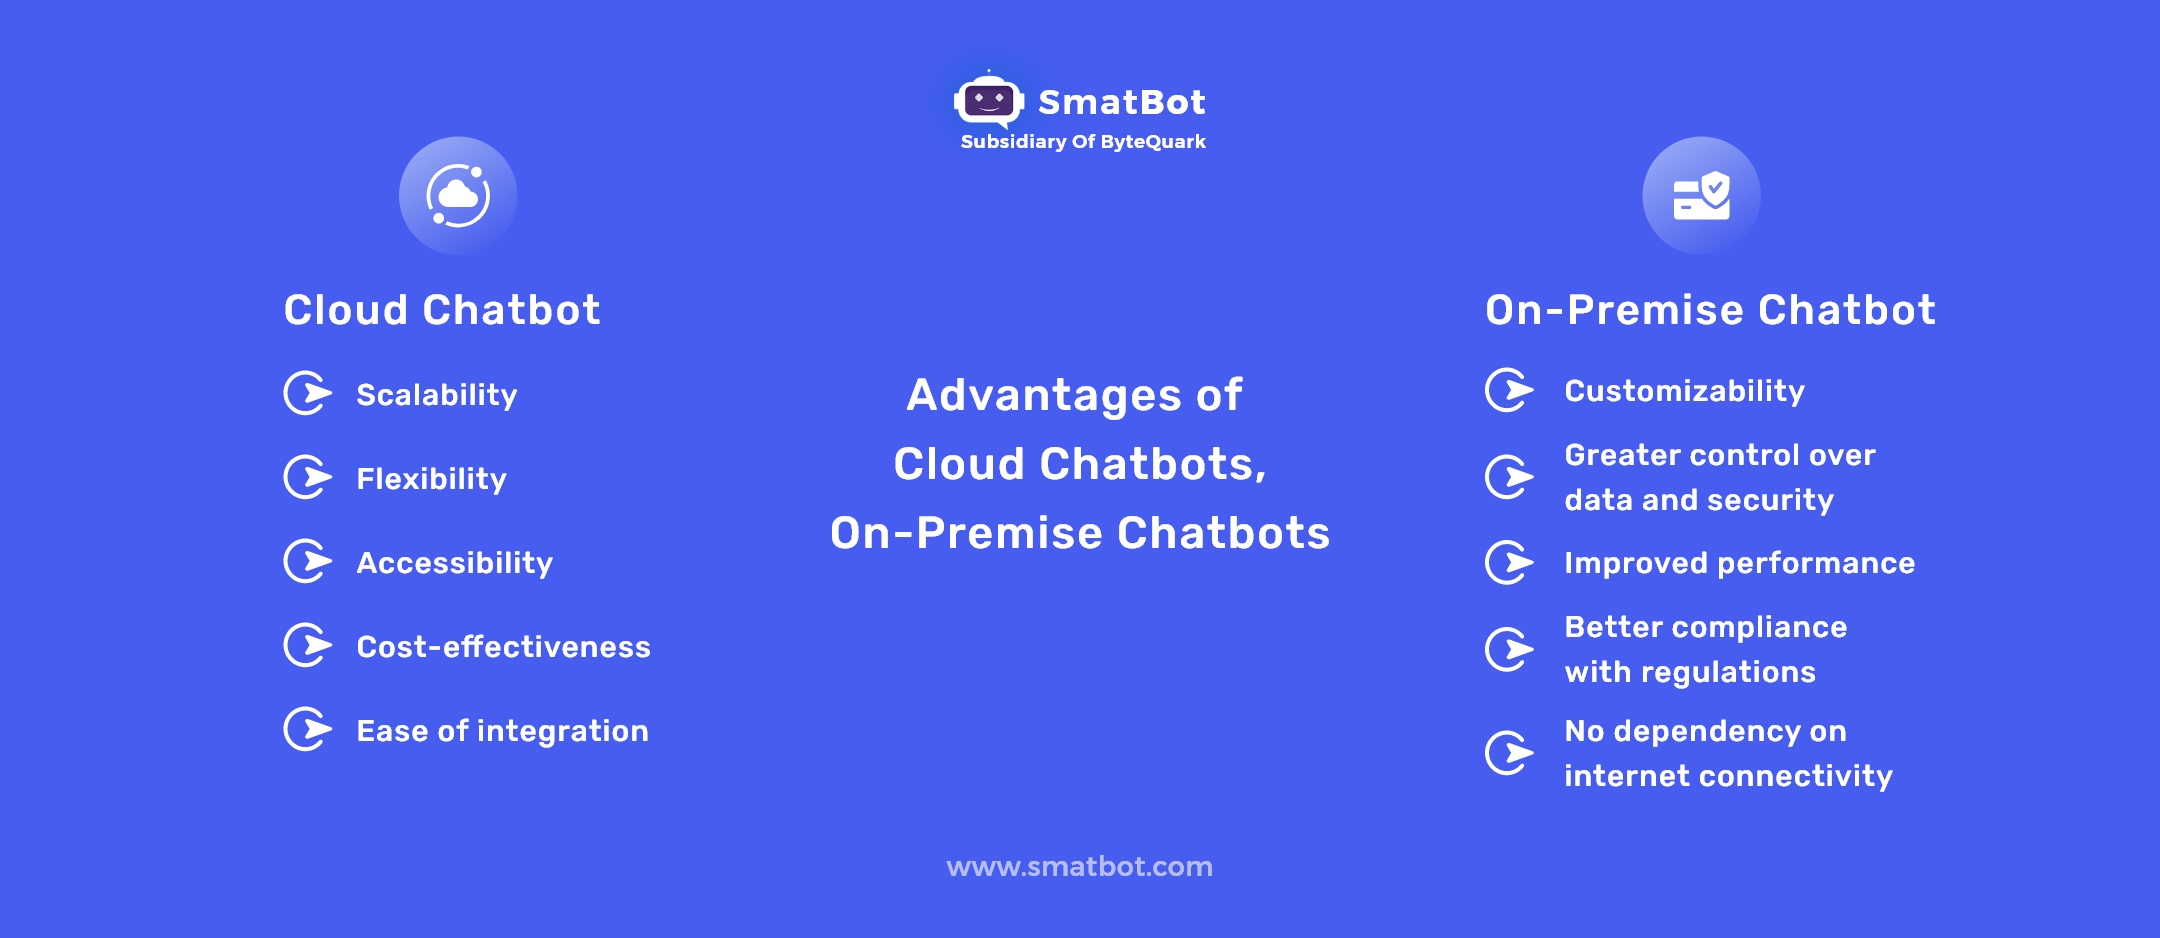 advantages of cloud chatbots and on-premise chatbots